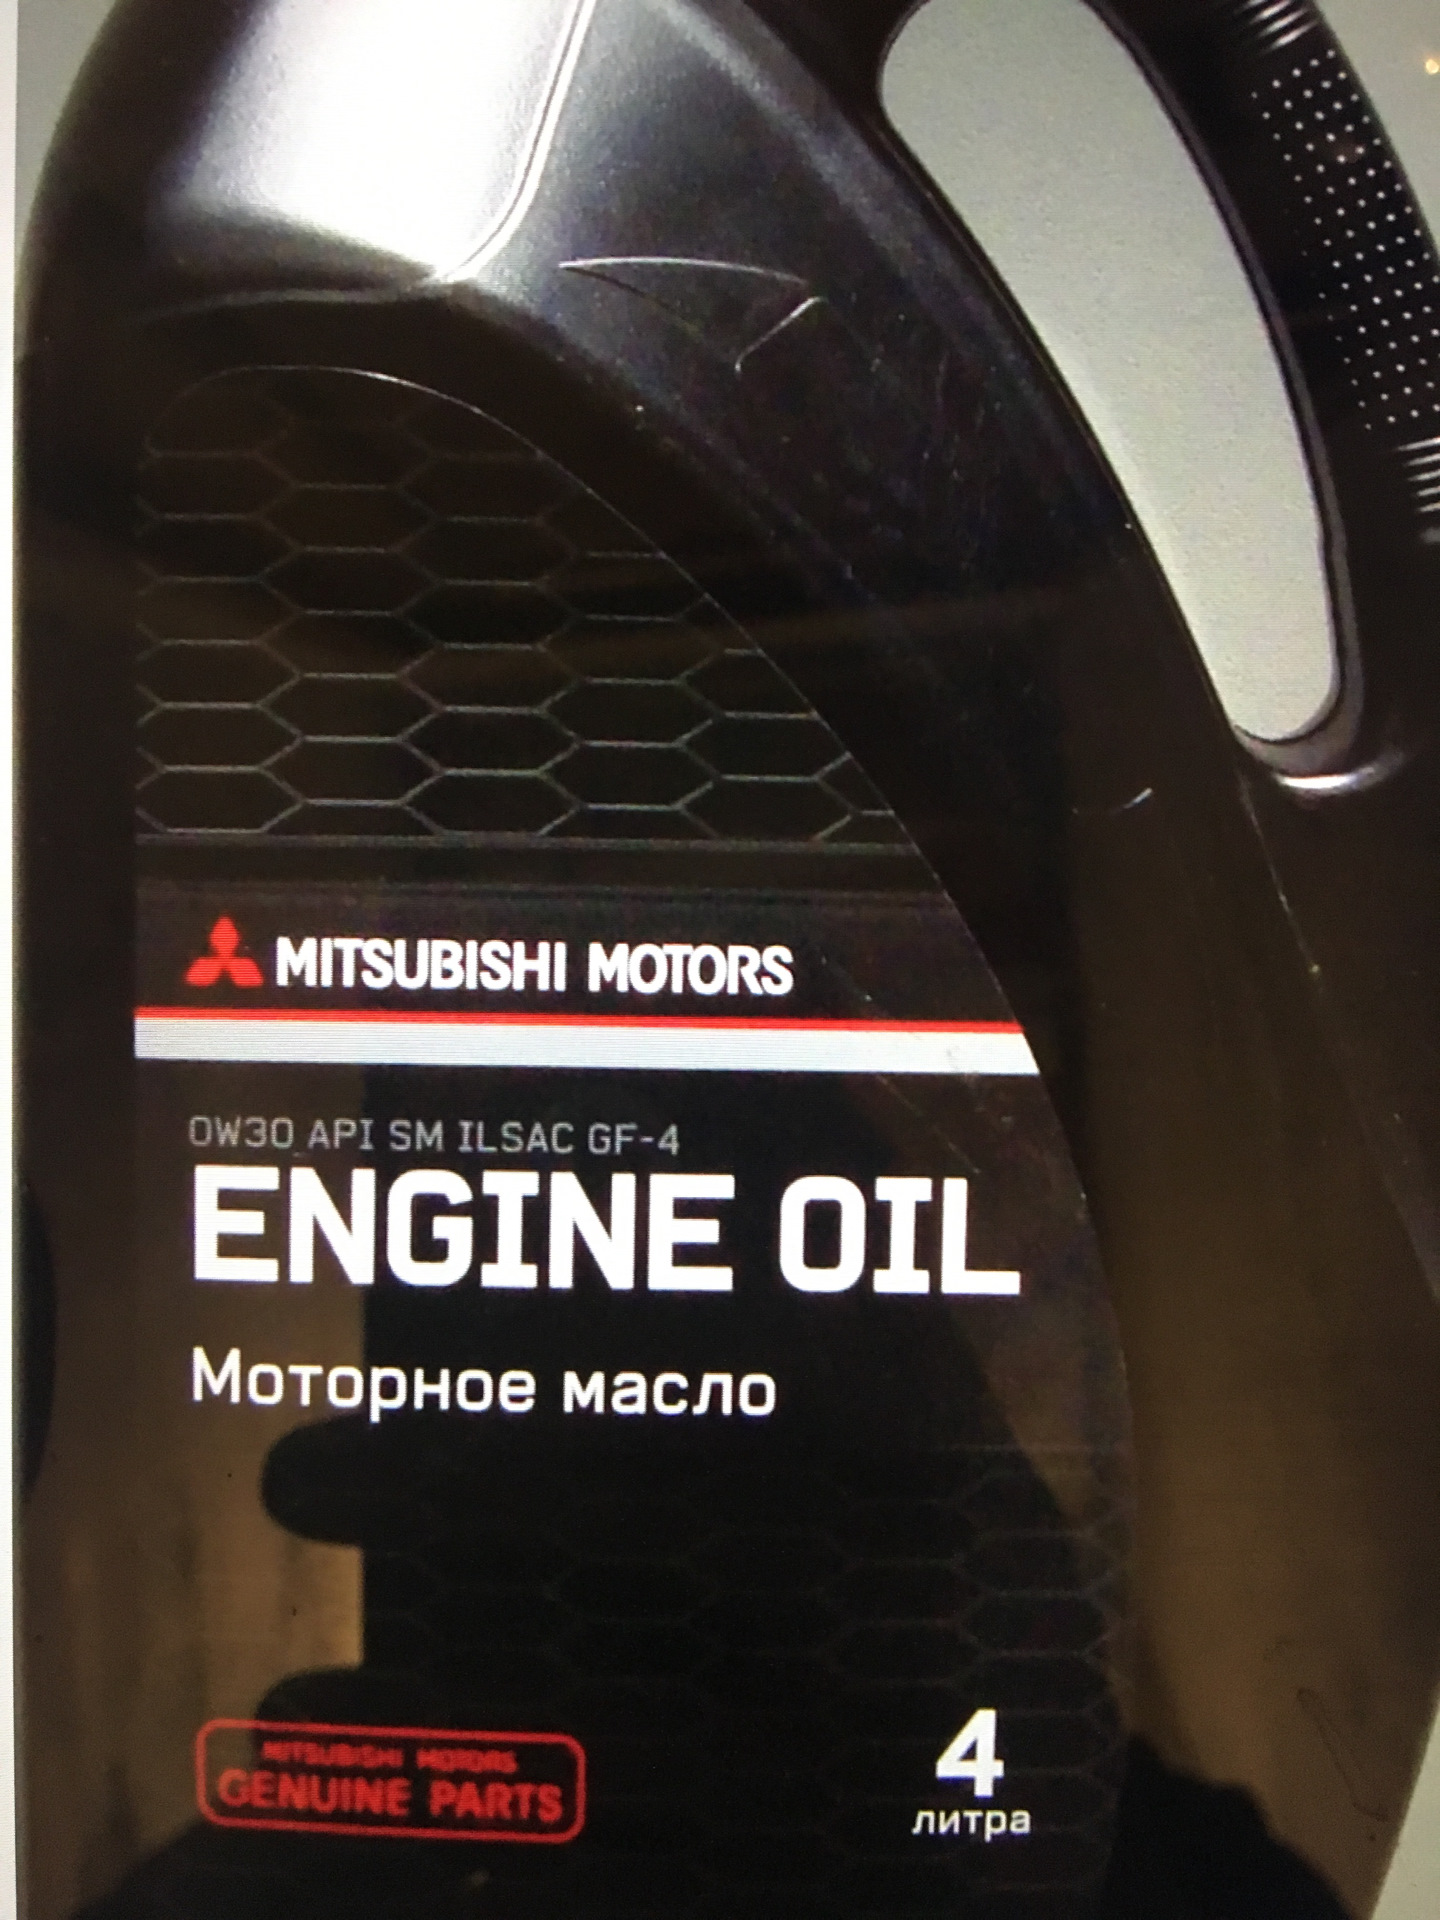 Масло митсубиси лансер 10 1.5. Масло моторное Mitsubishi 0w30. Моторное масло Mitsubishi синтетика 0w30. Моторное масло для Мицубиси Лансер 10. Engine Oil моторное масло Митсубиси 4 литра.